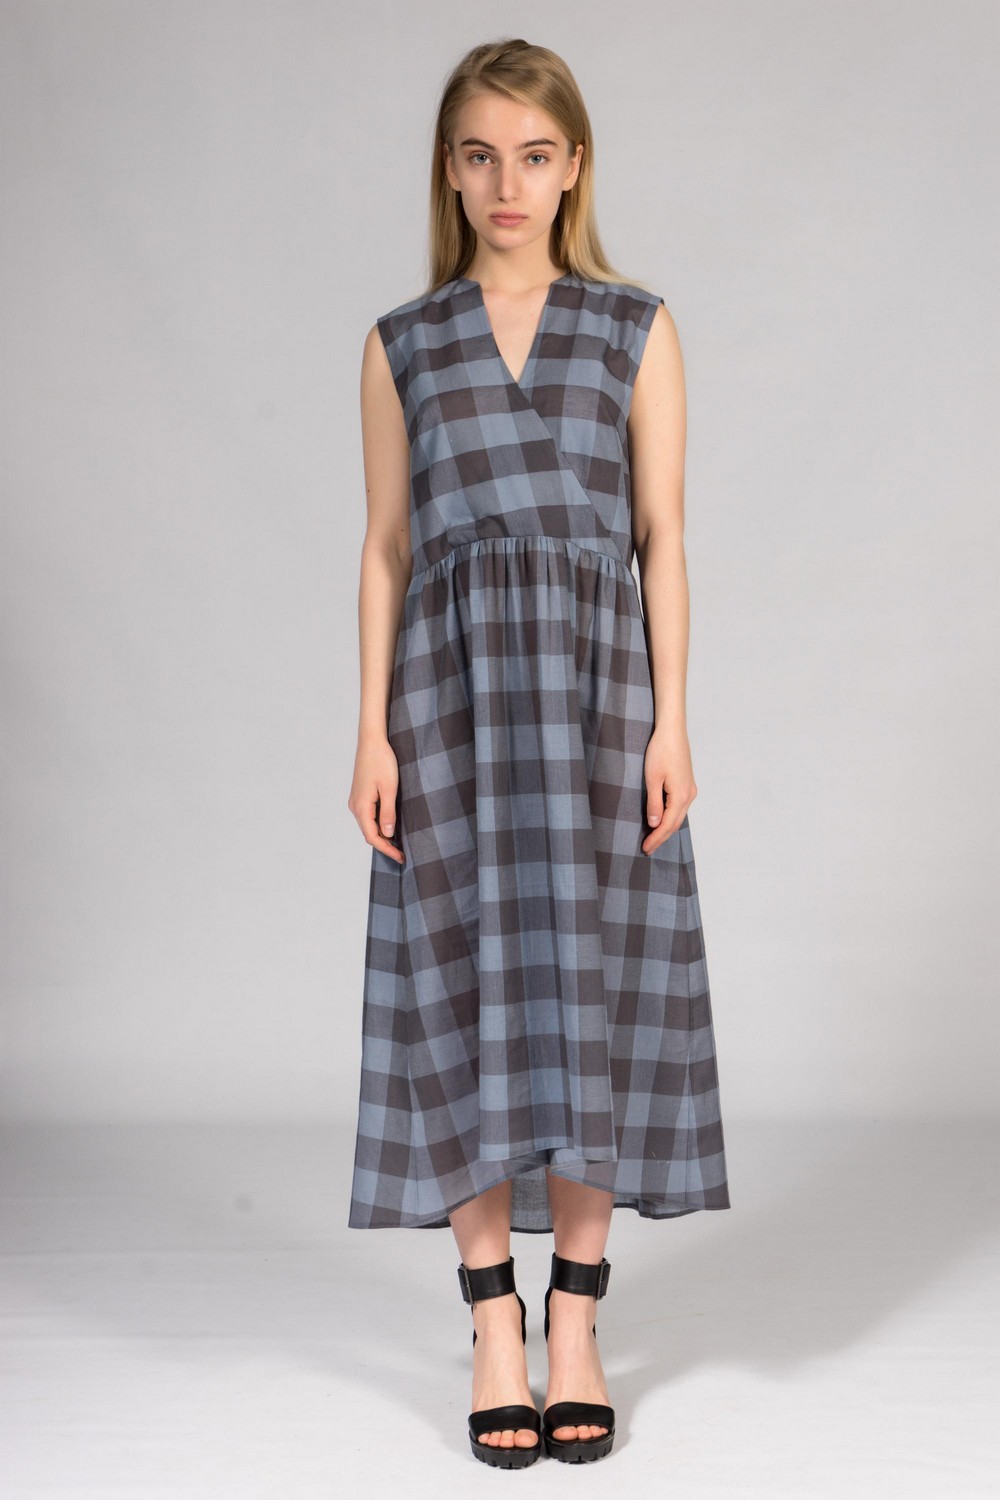 Buy Summer cotton midi loose checkered dress, Sleeveless V neck dress, Сomfortable casual ladies dress